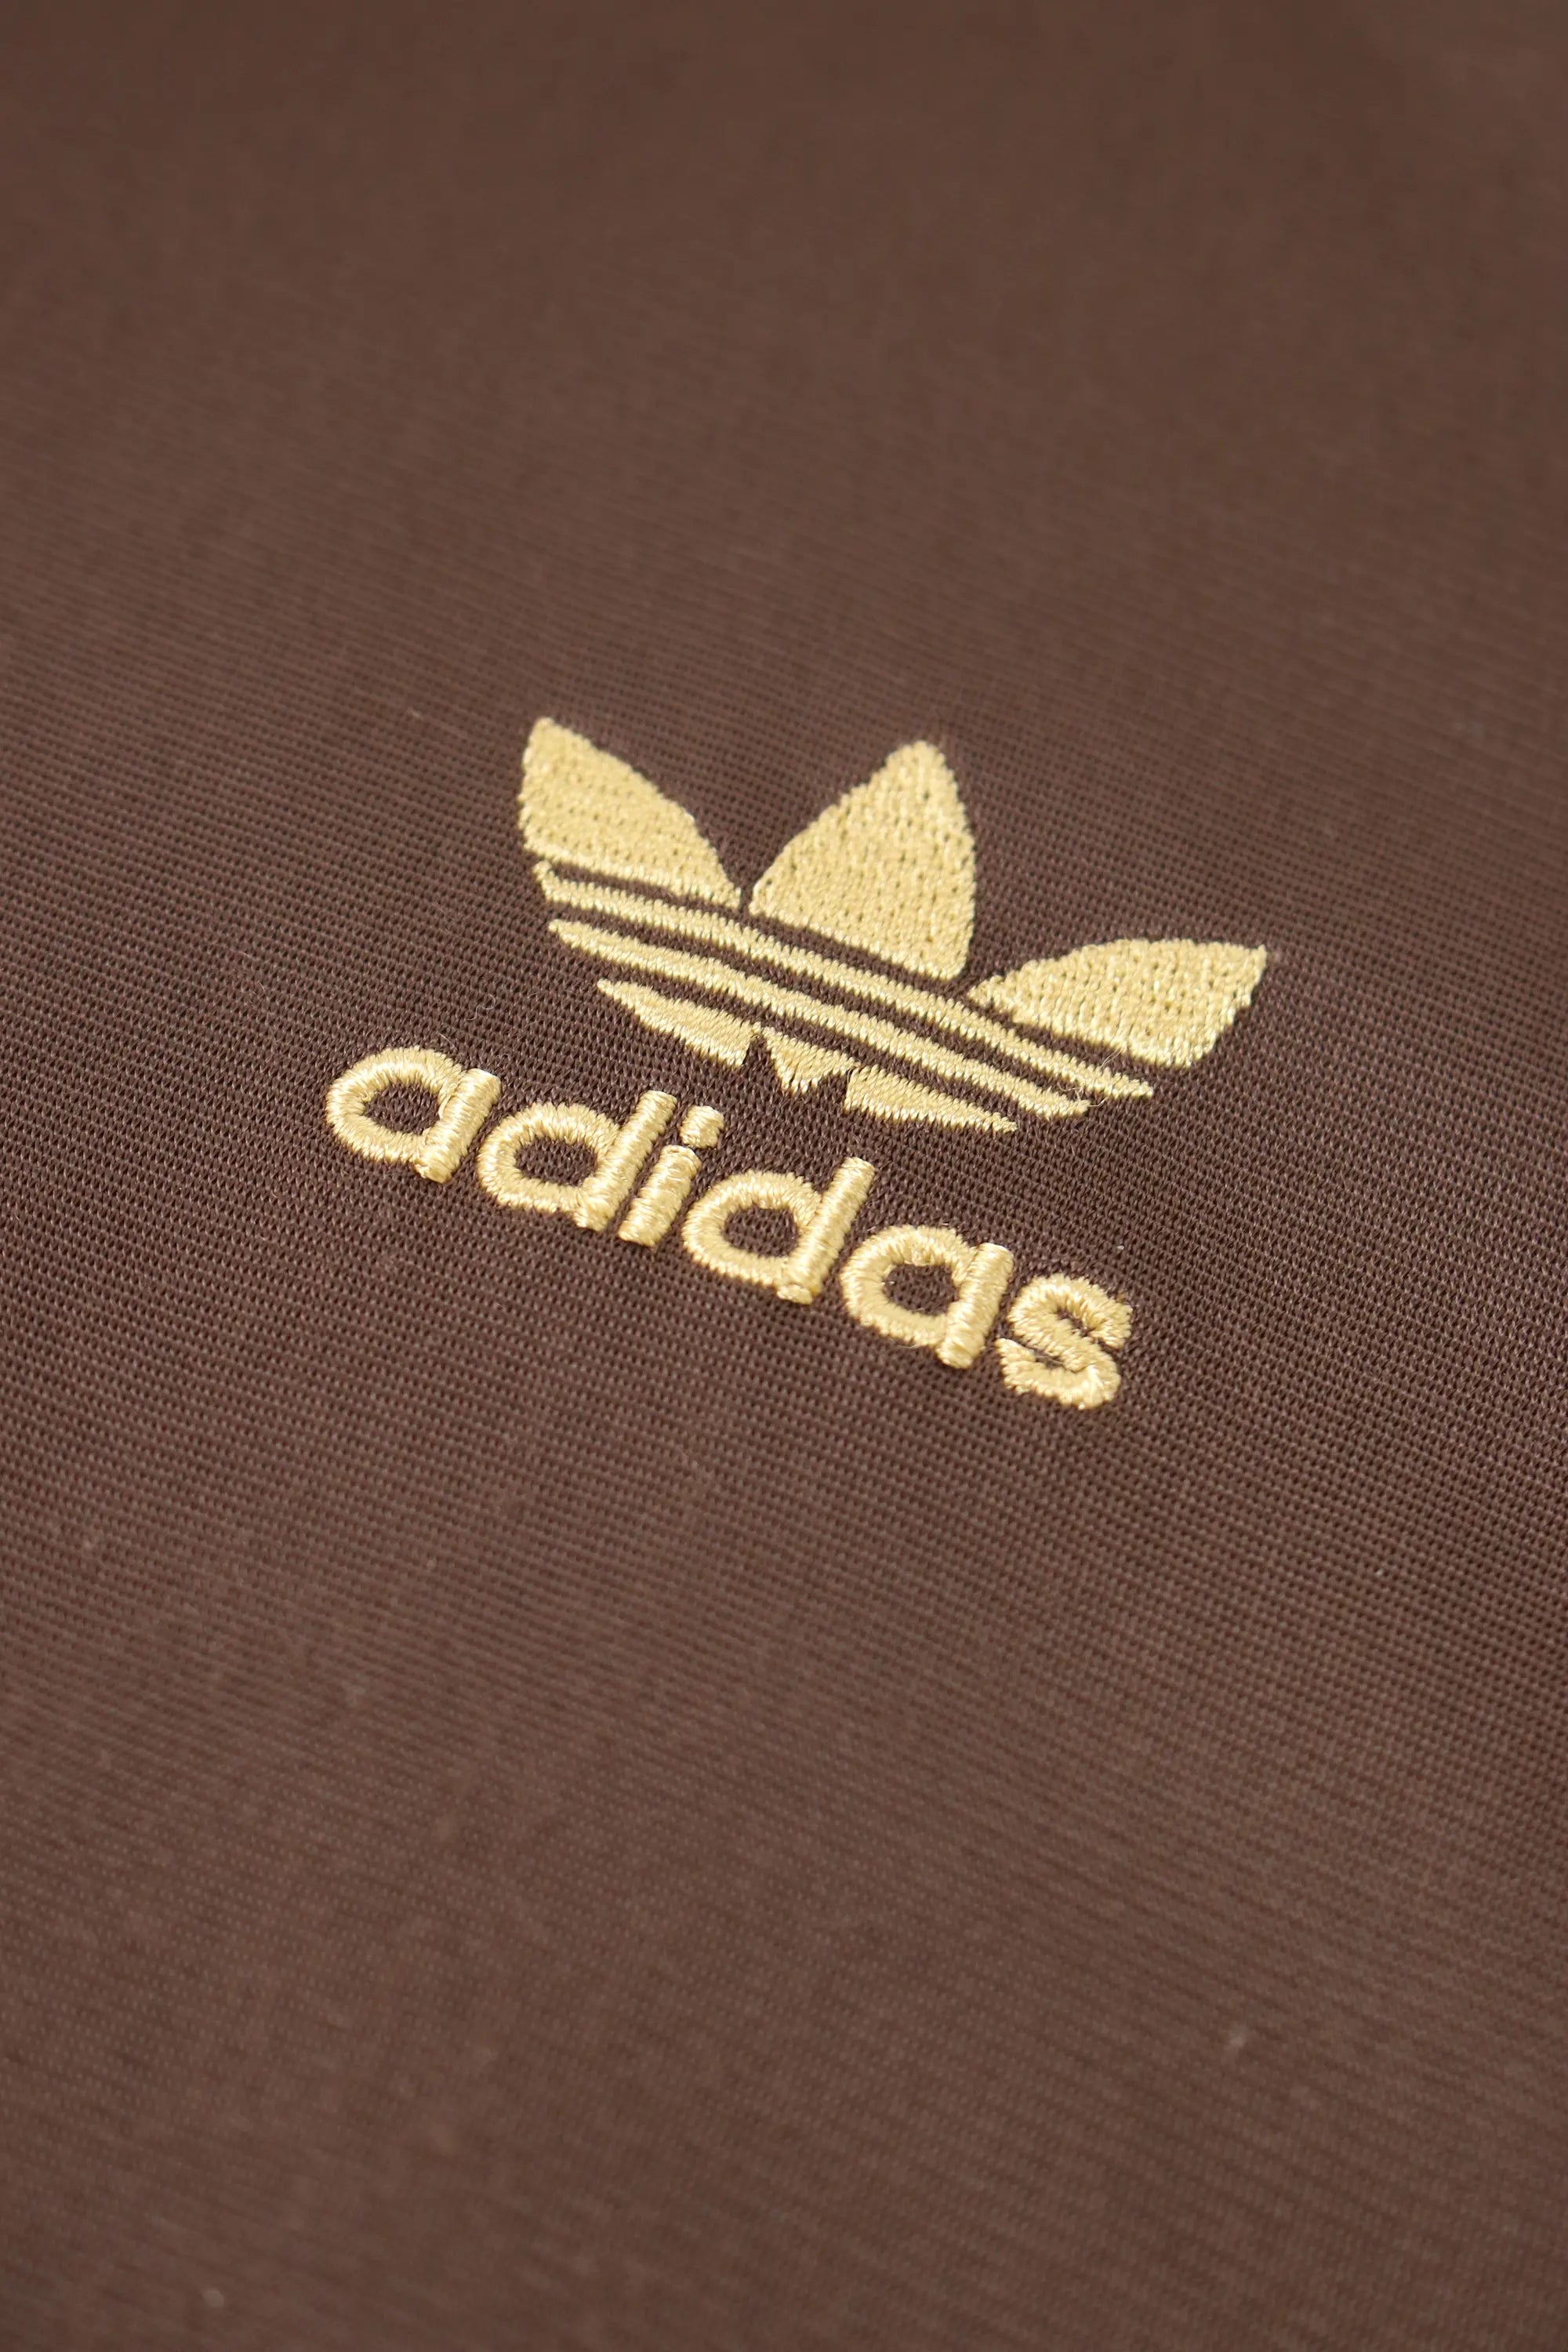 Adidas '05 Superstar Trackjacket